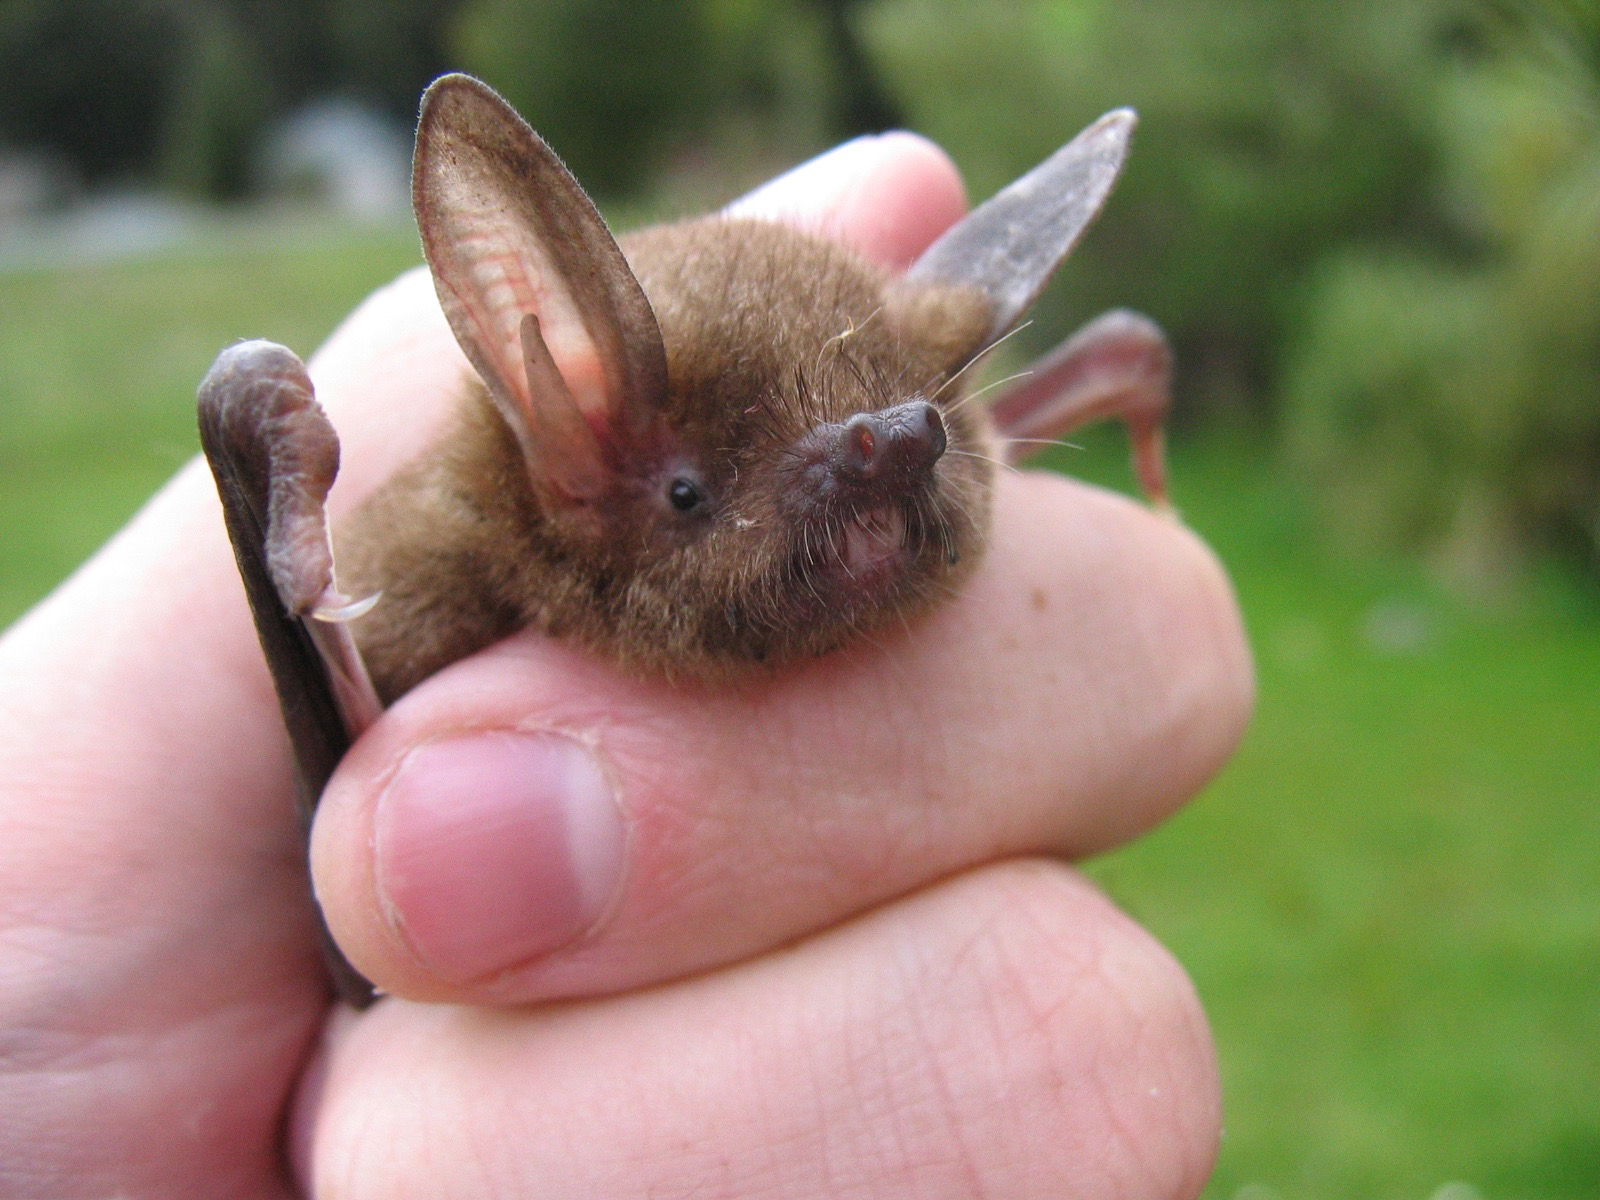 A lesser short-tailed bat beding carefully help.